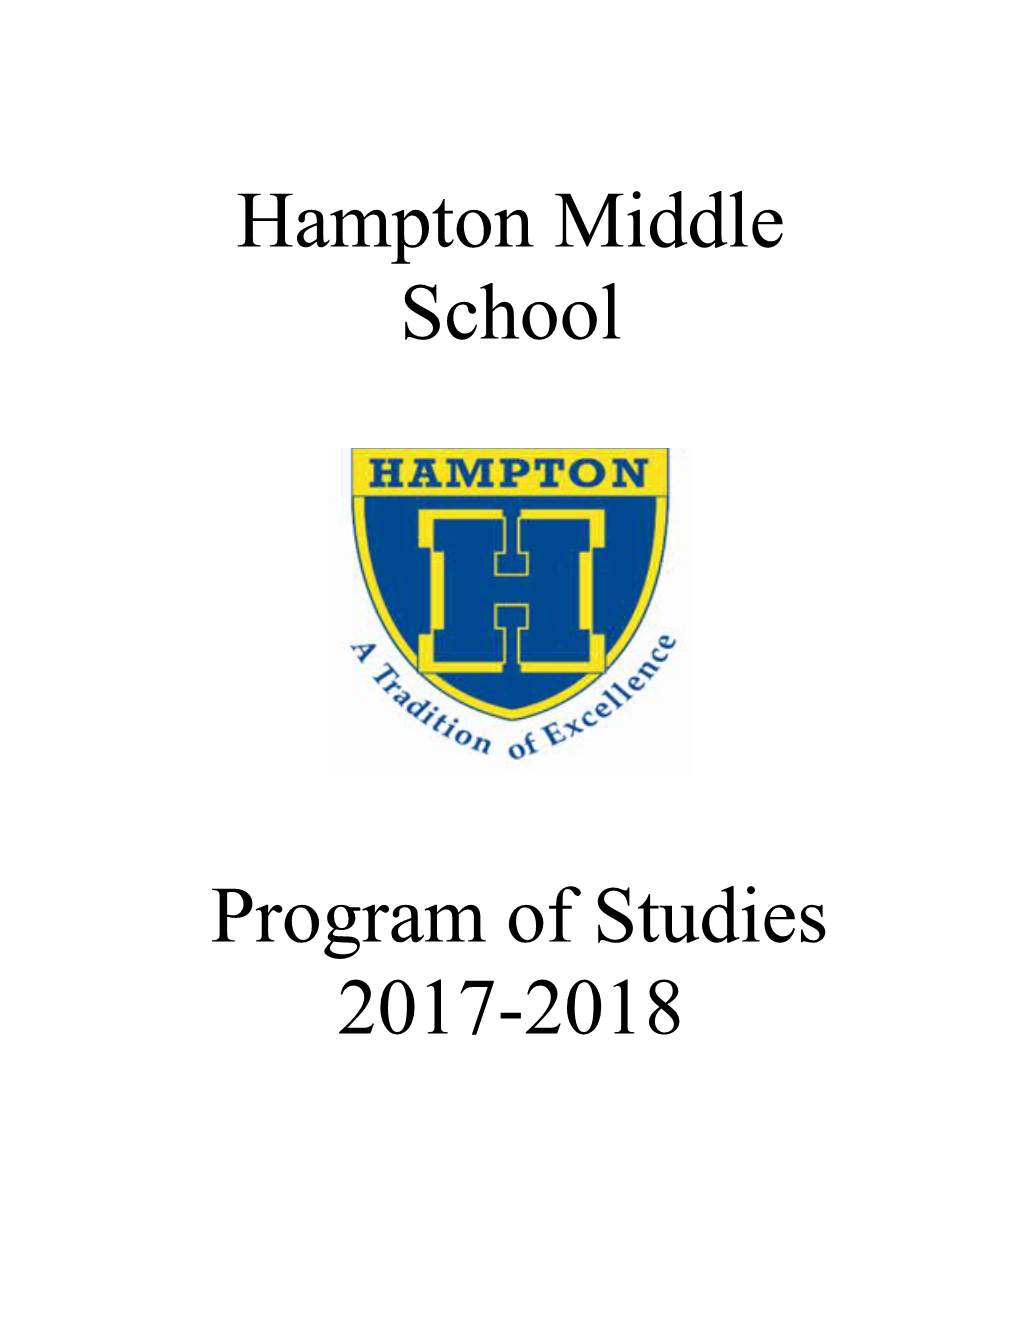 Hampton Middle School Administration/Staff